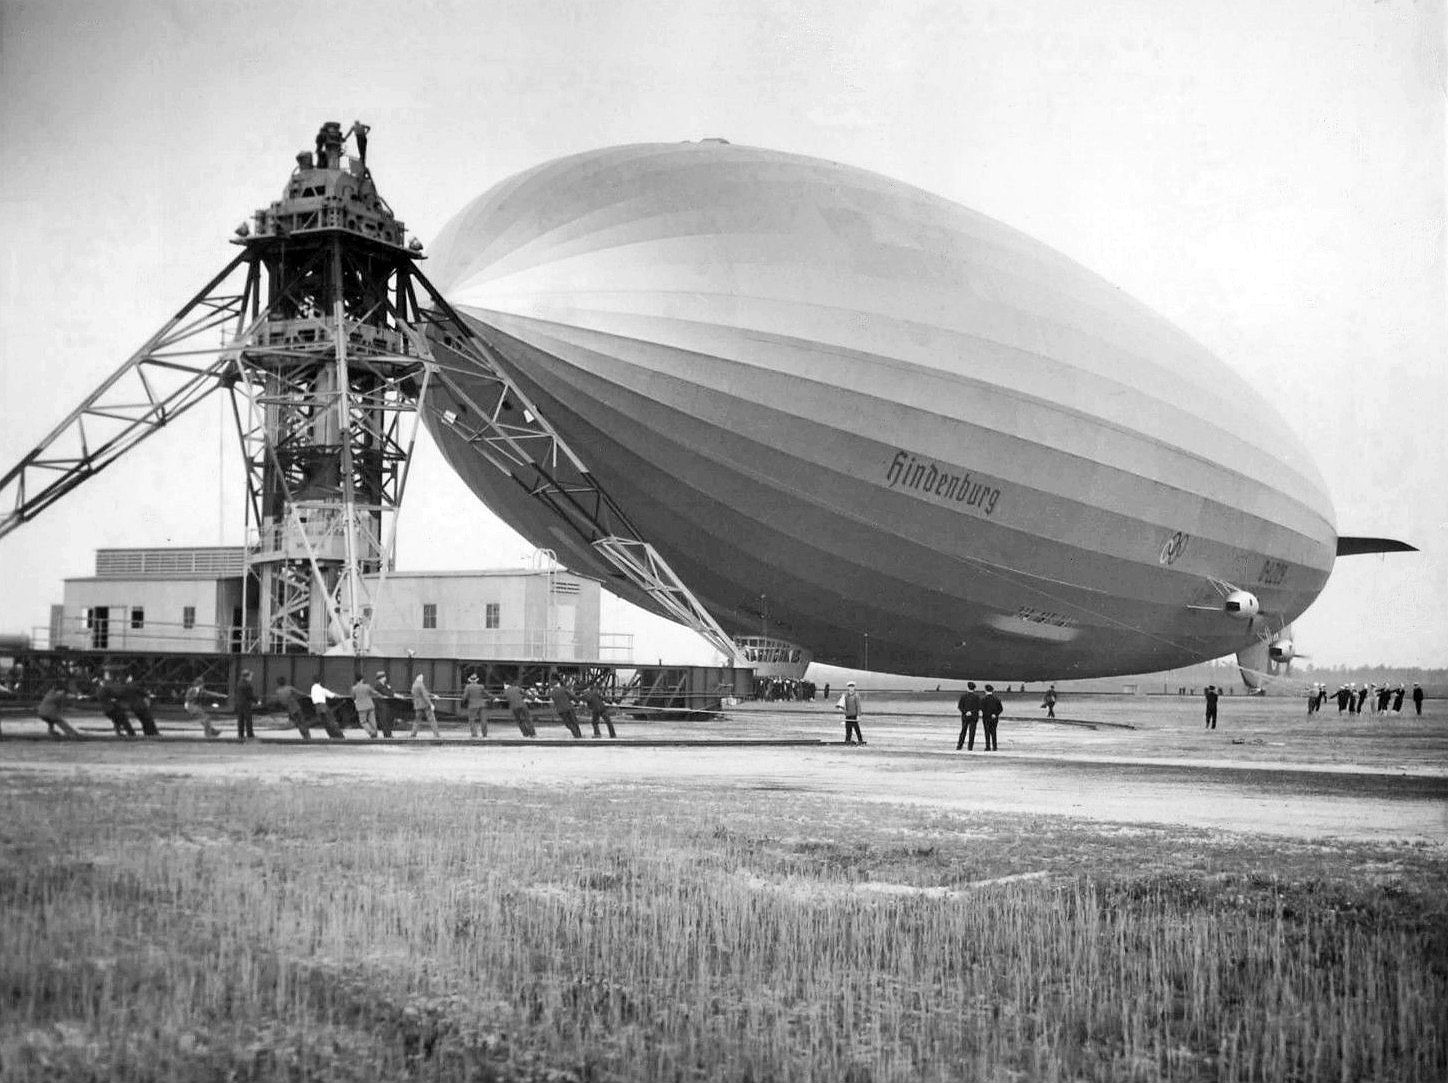 The Hindenburg mooring at Lakehurst 1936.